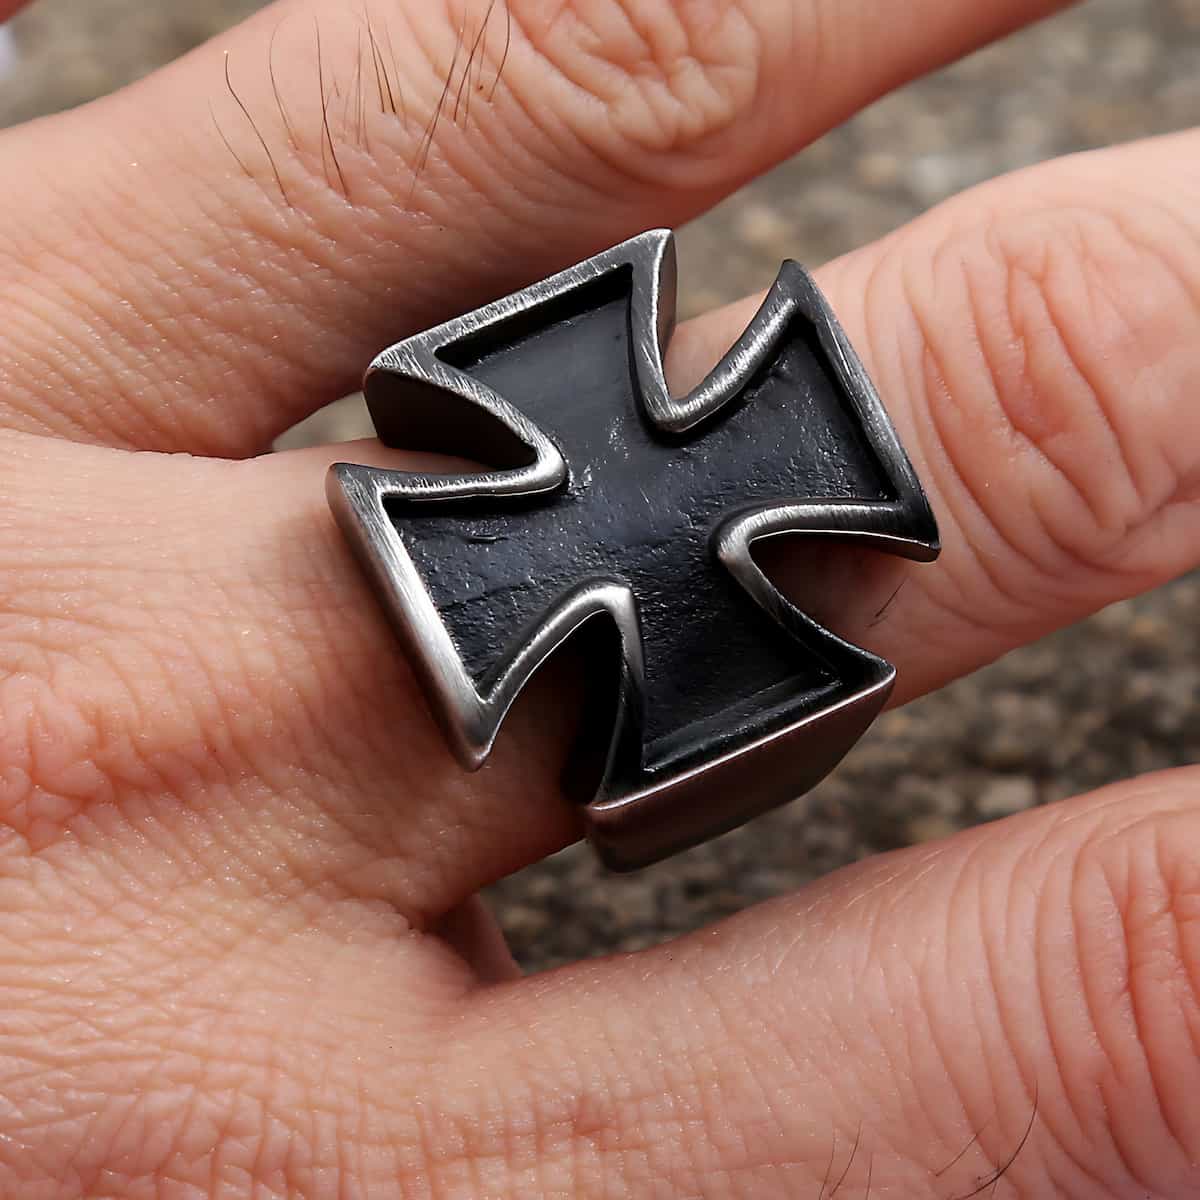 Iron Cross Ring Xenos Jewelry